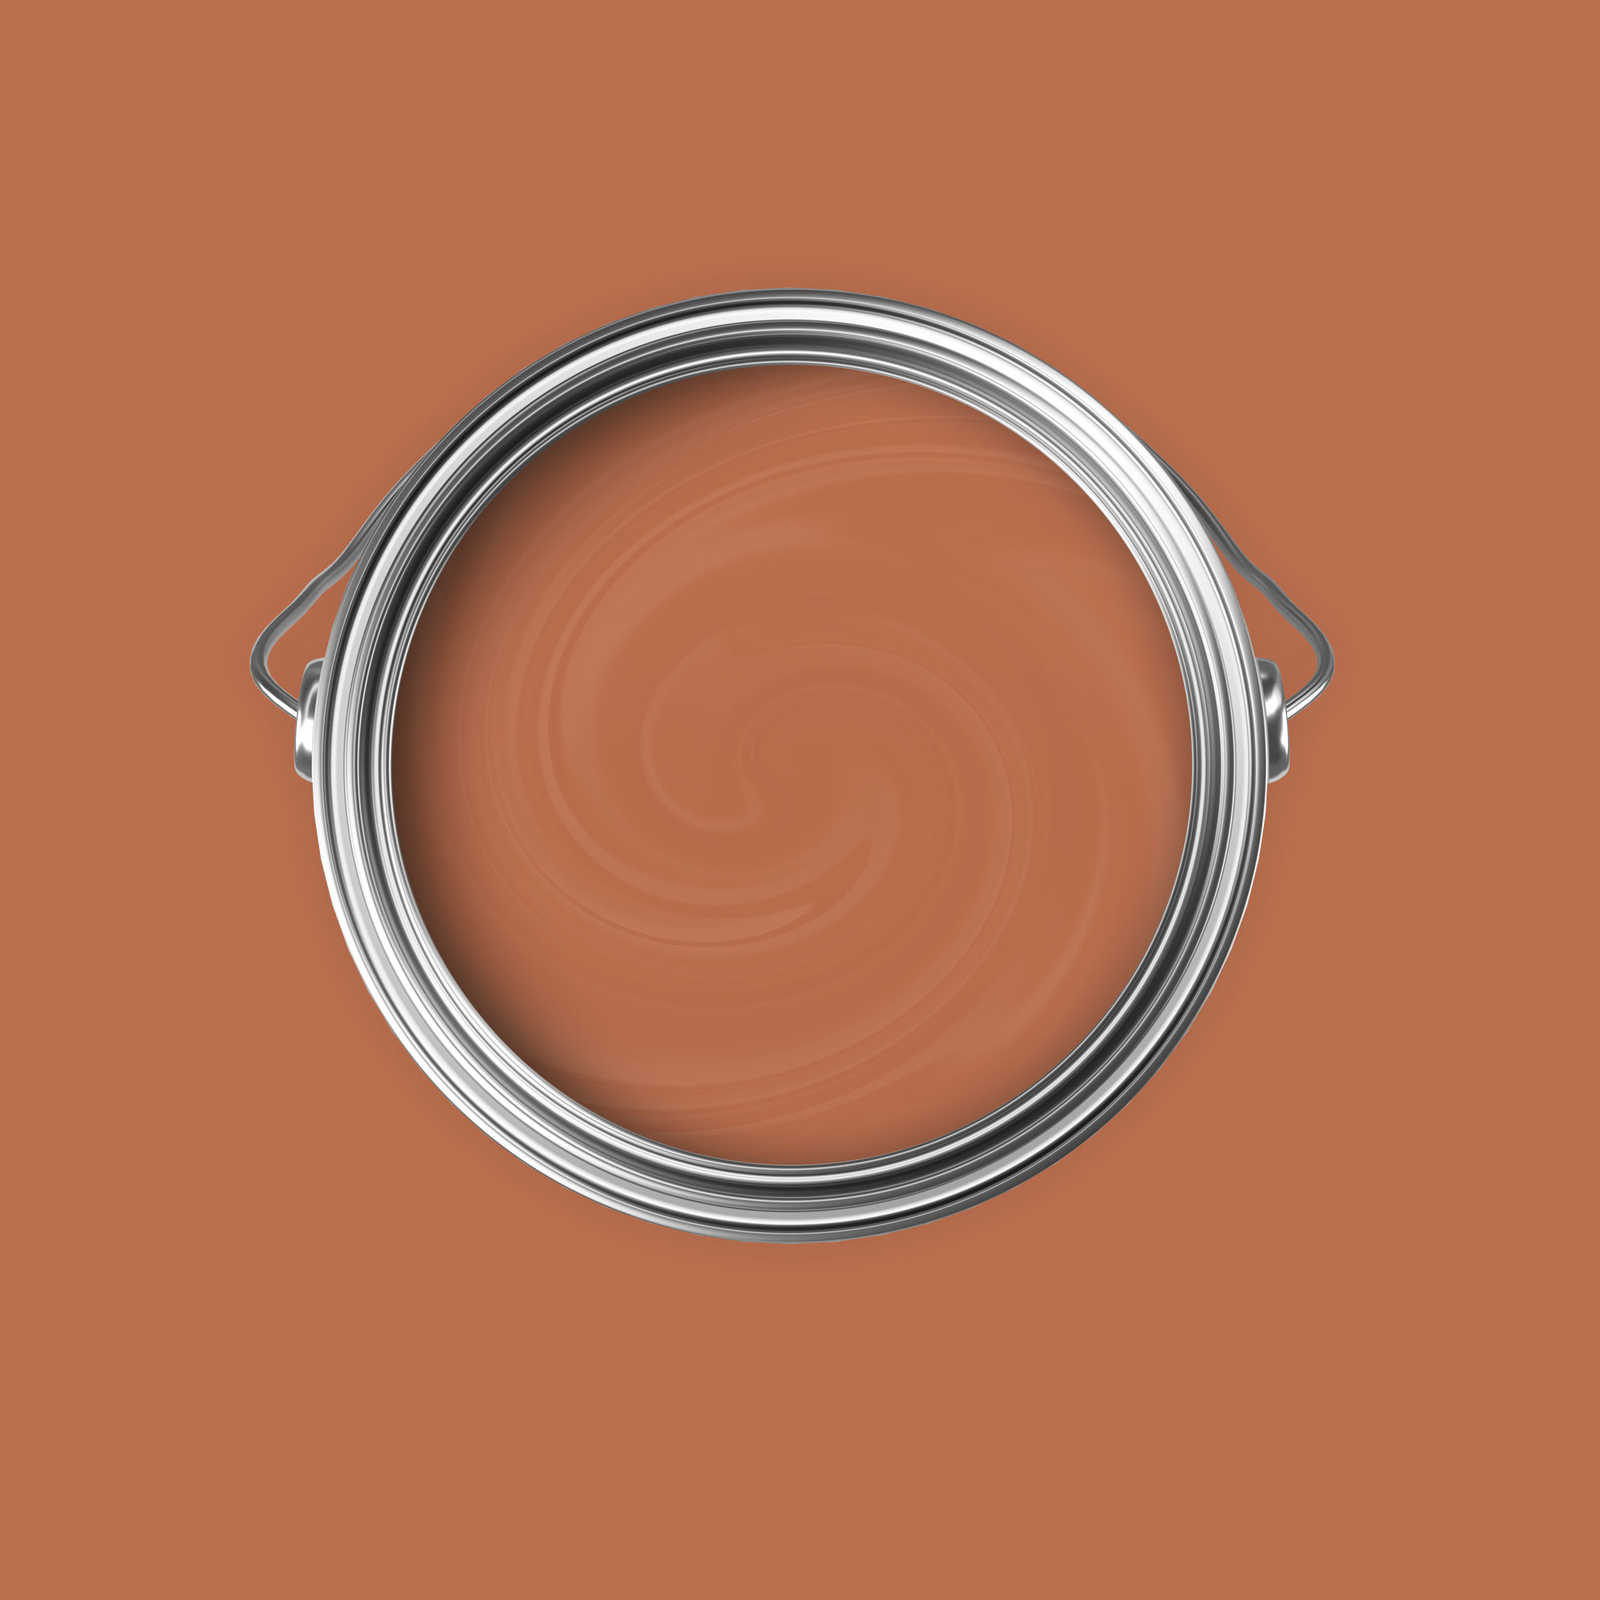             Premium Wandfarbe anregendes Kupfer »Pretty Peach« NW905 – 5 Liter
        